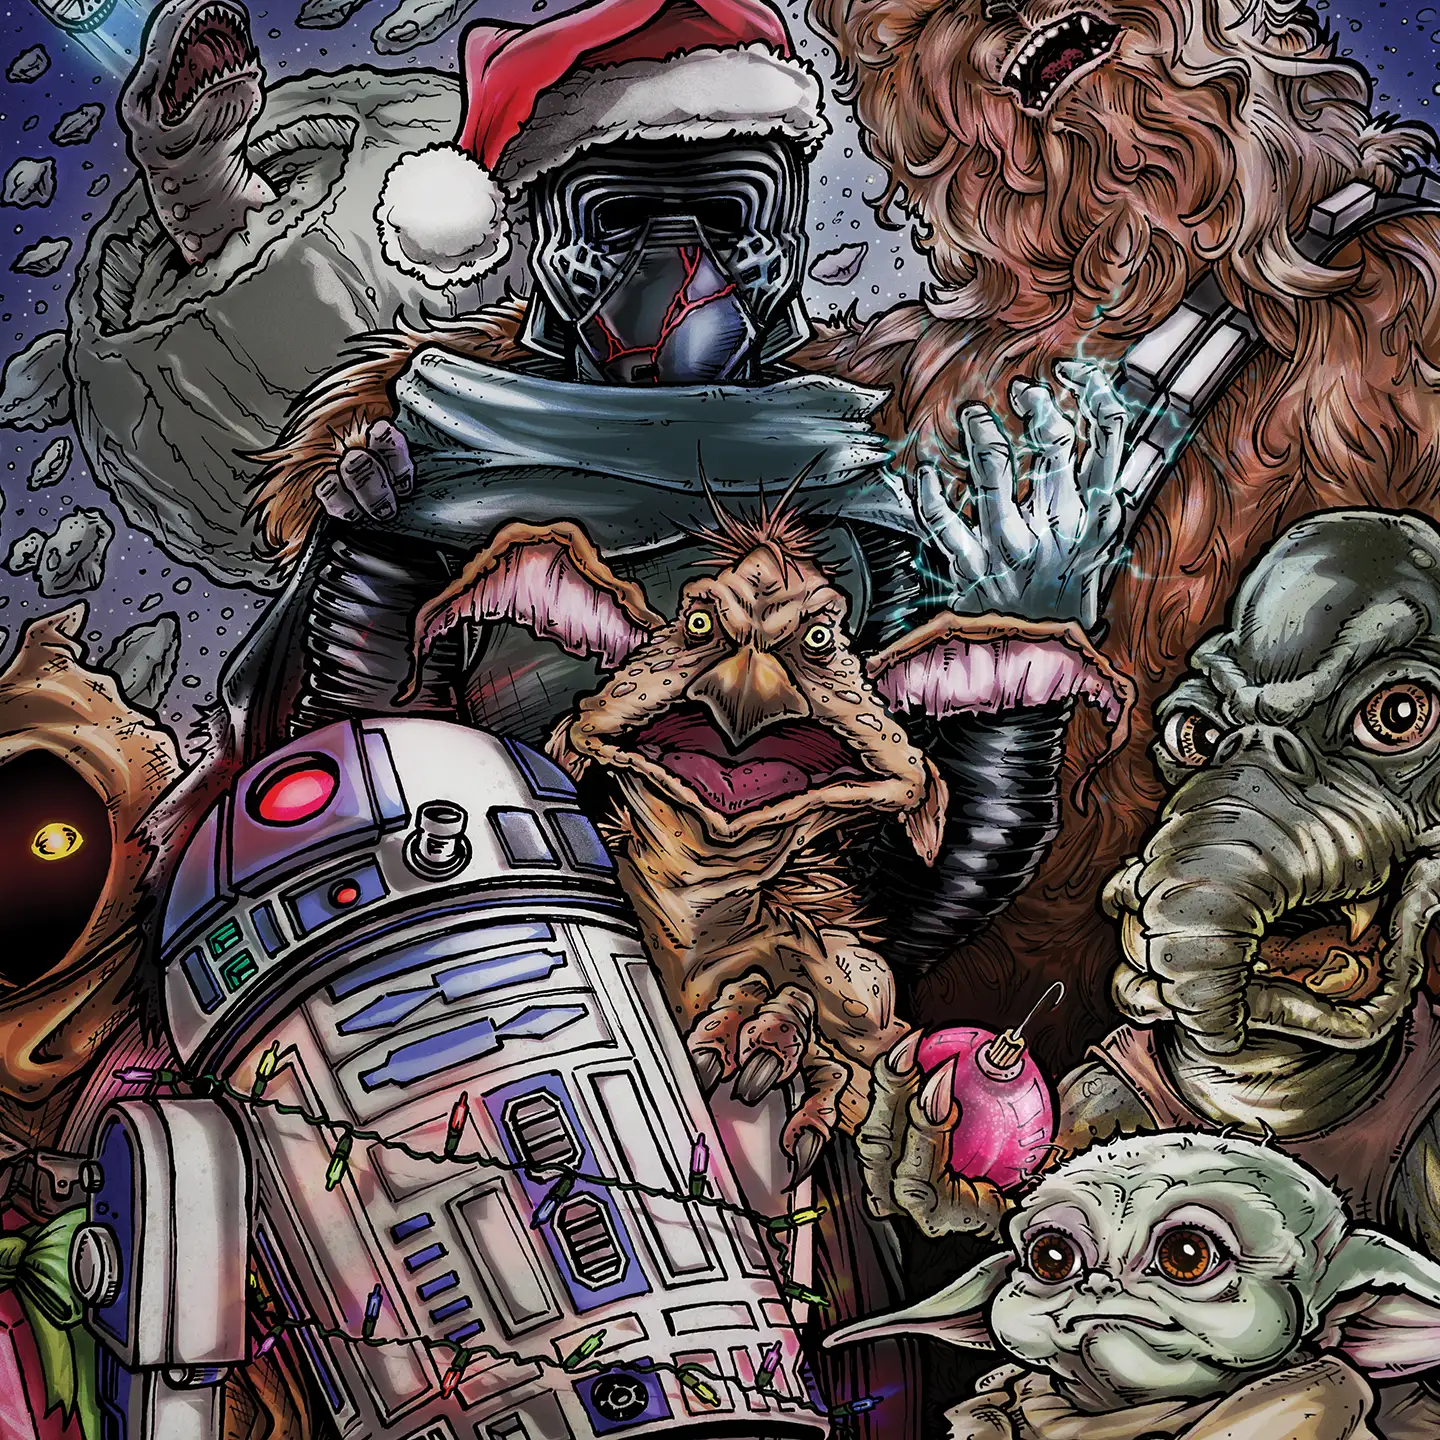 A Star Wars Christmas illustration